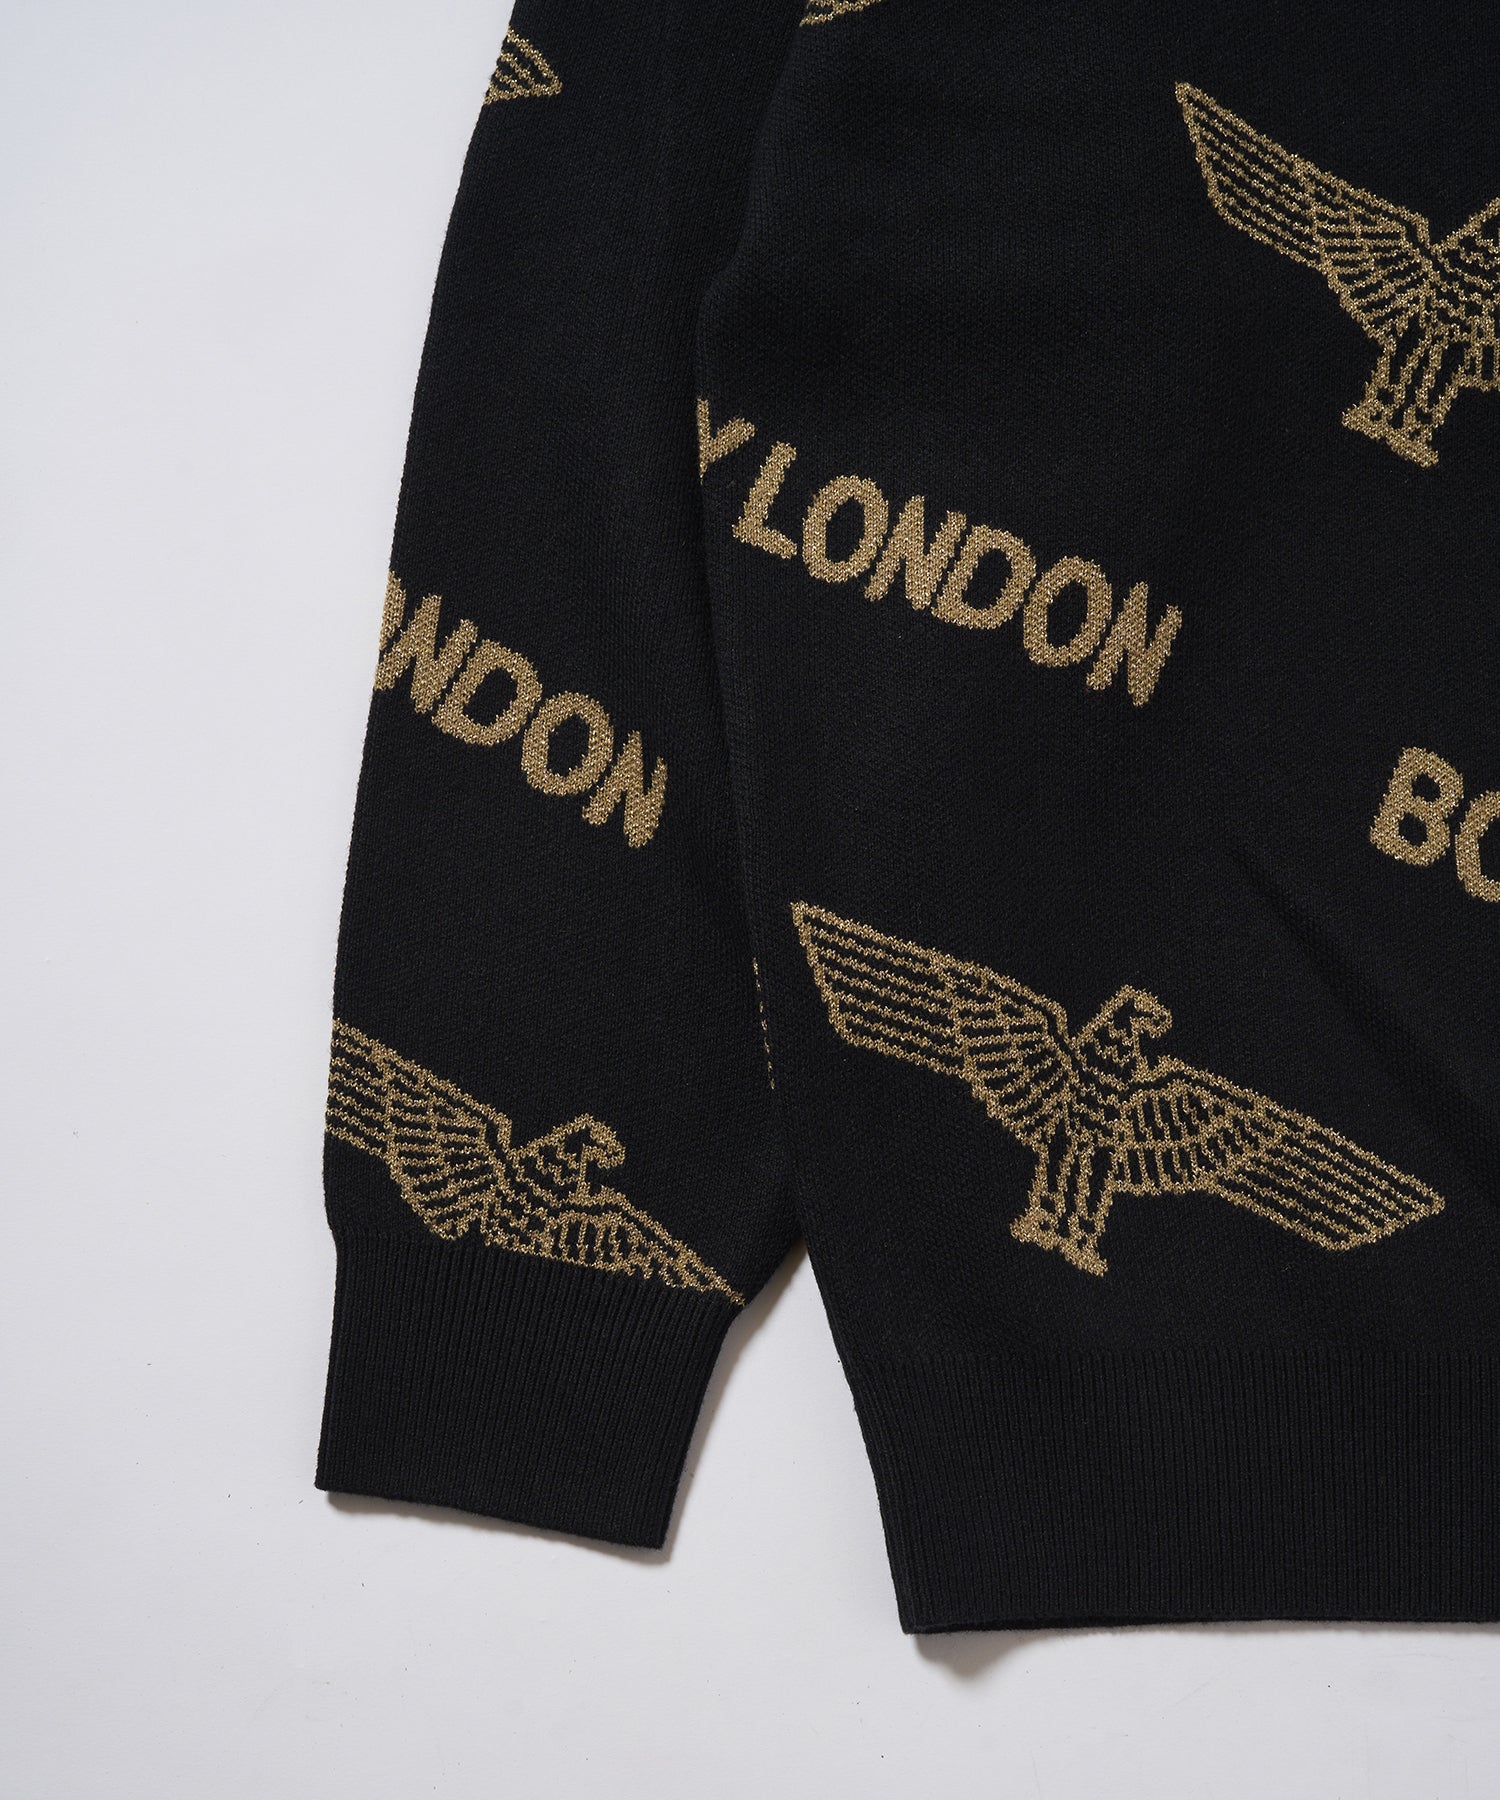 Gold LOGO Jacquard Knit Pullover BLACK【B233N6090102】 – BOY LONDON